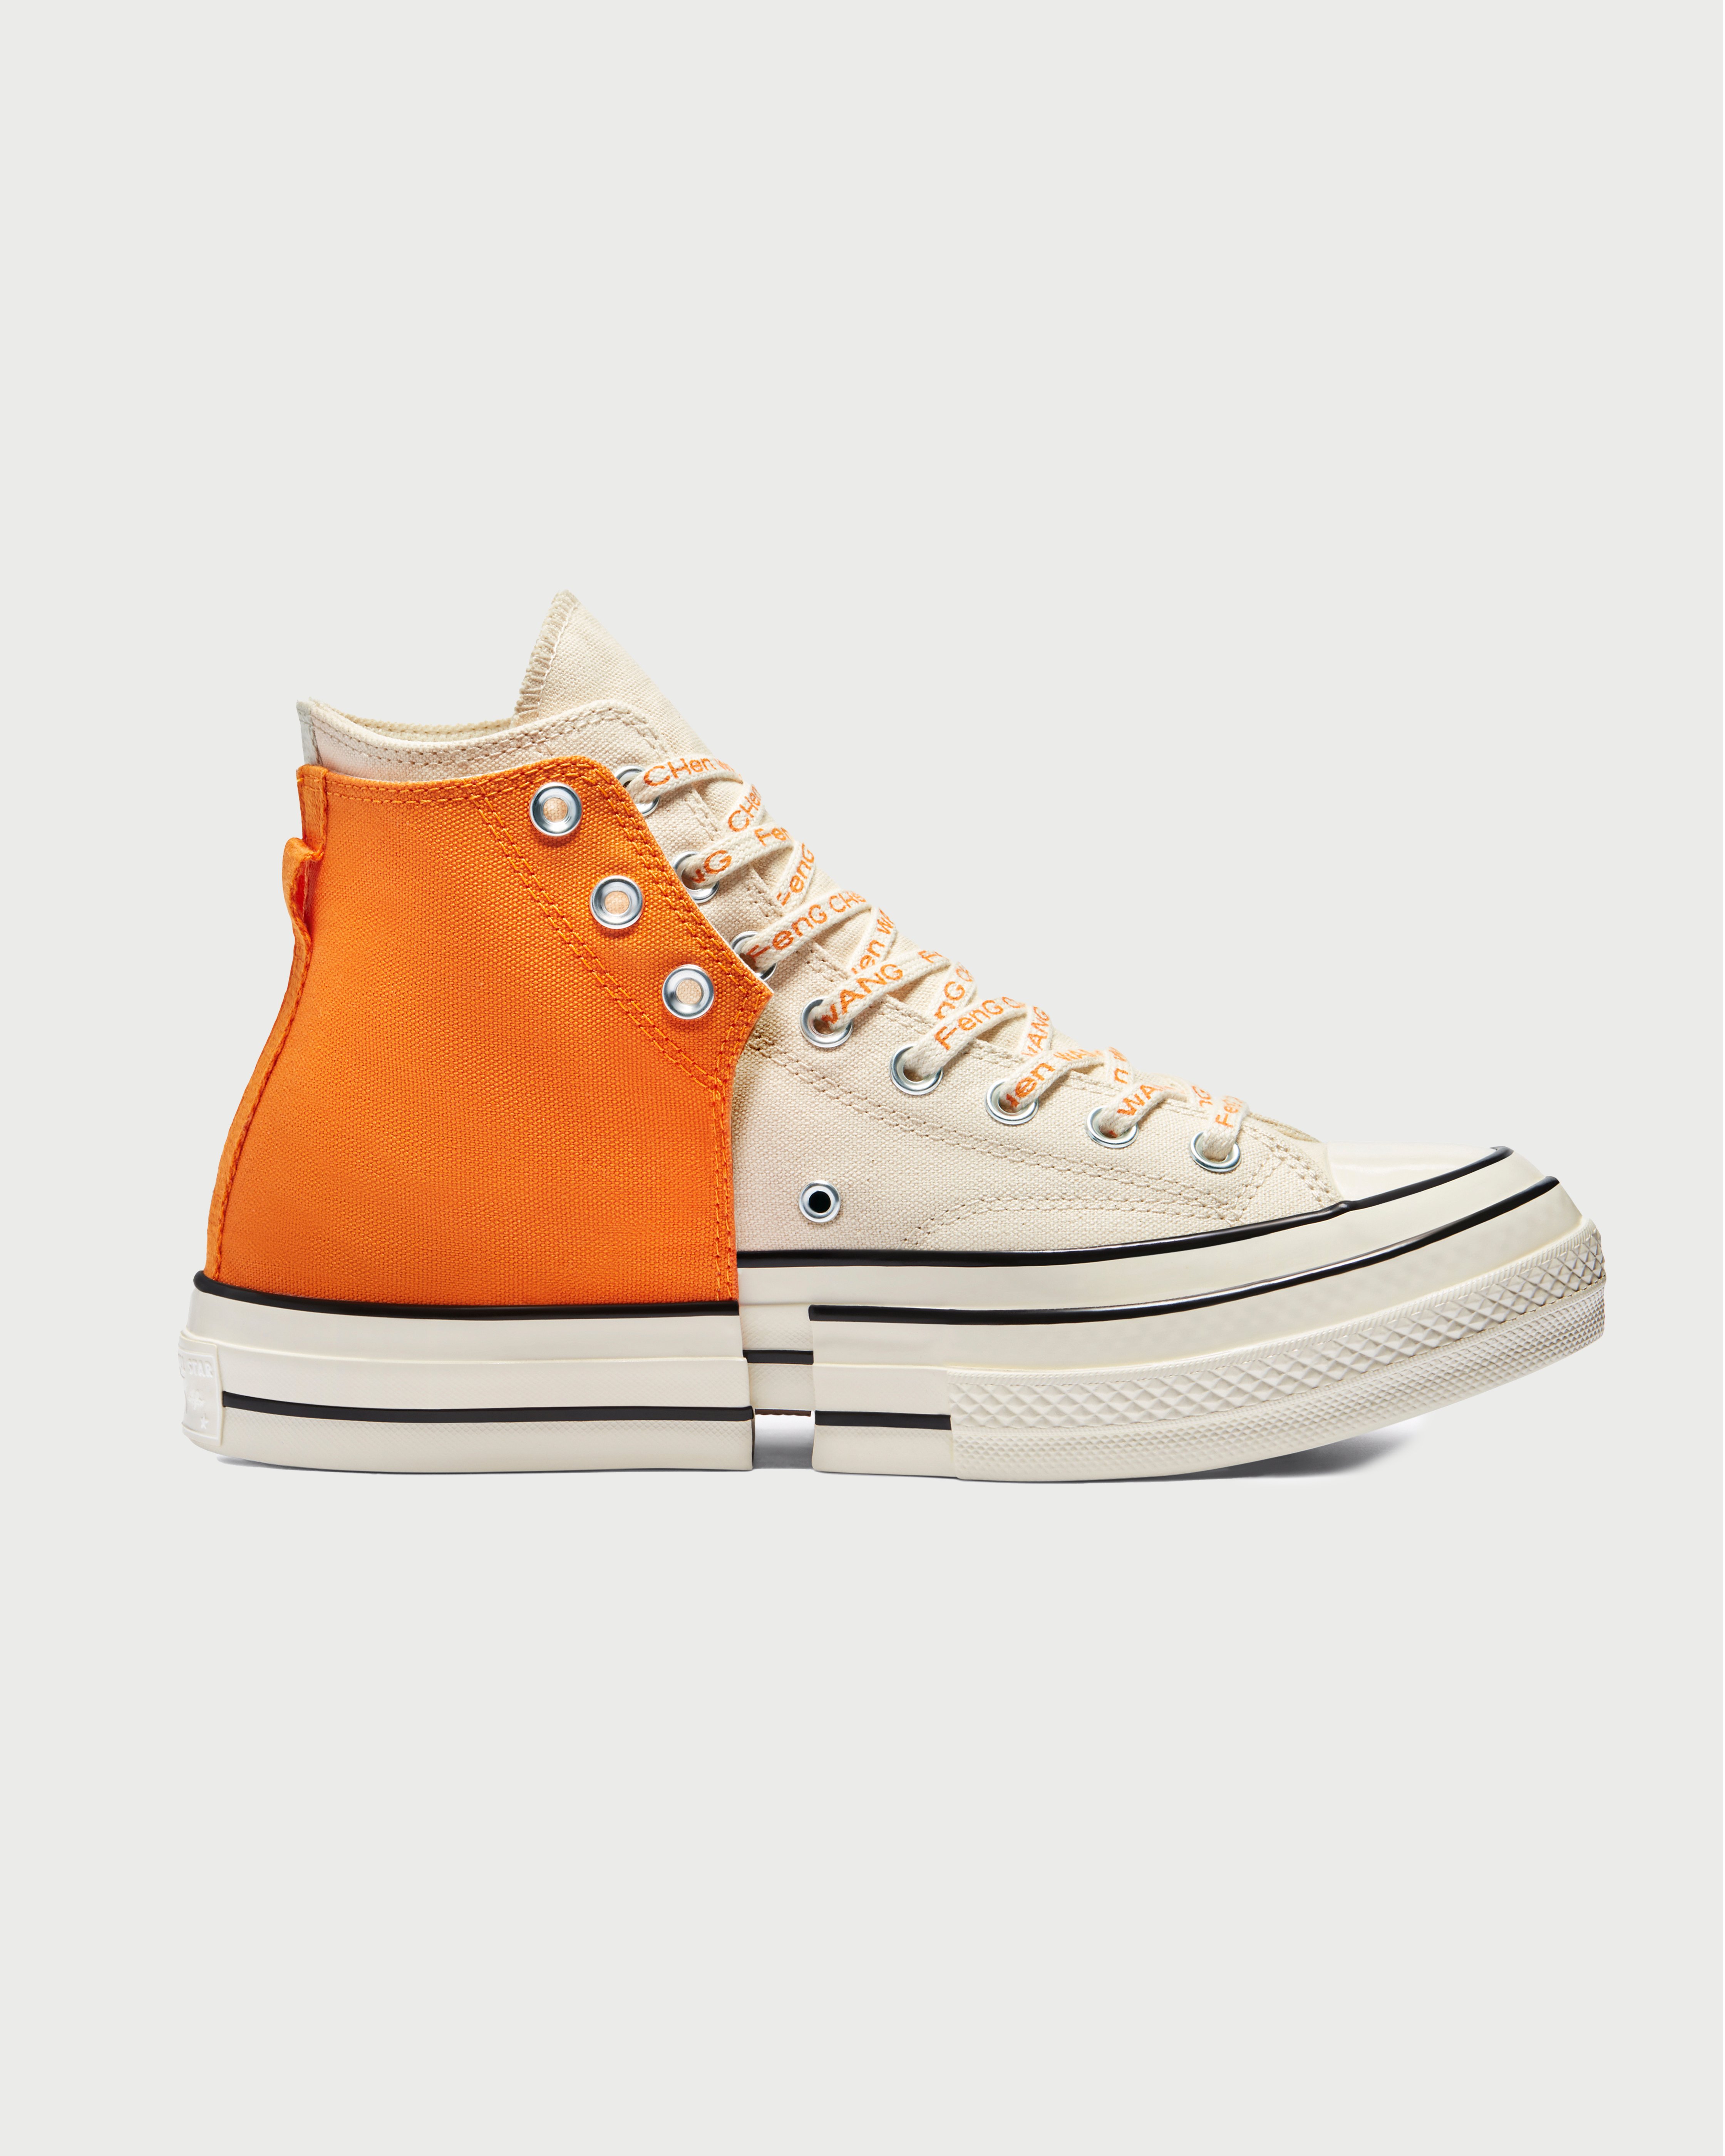 Converse x Feng Chen Wang - 2-in-1 Chuck 70 High Persimmon Orange - Footwear - Orange - Image 1